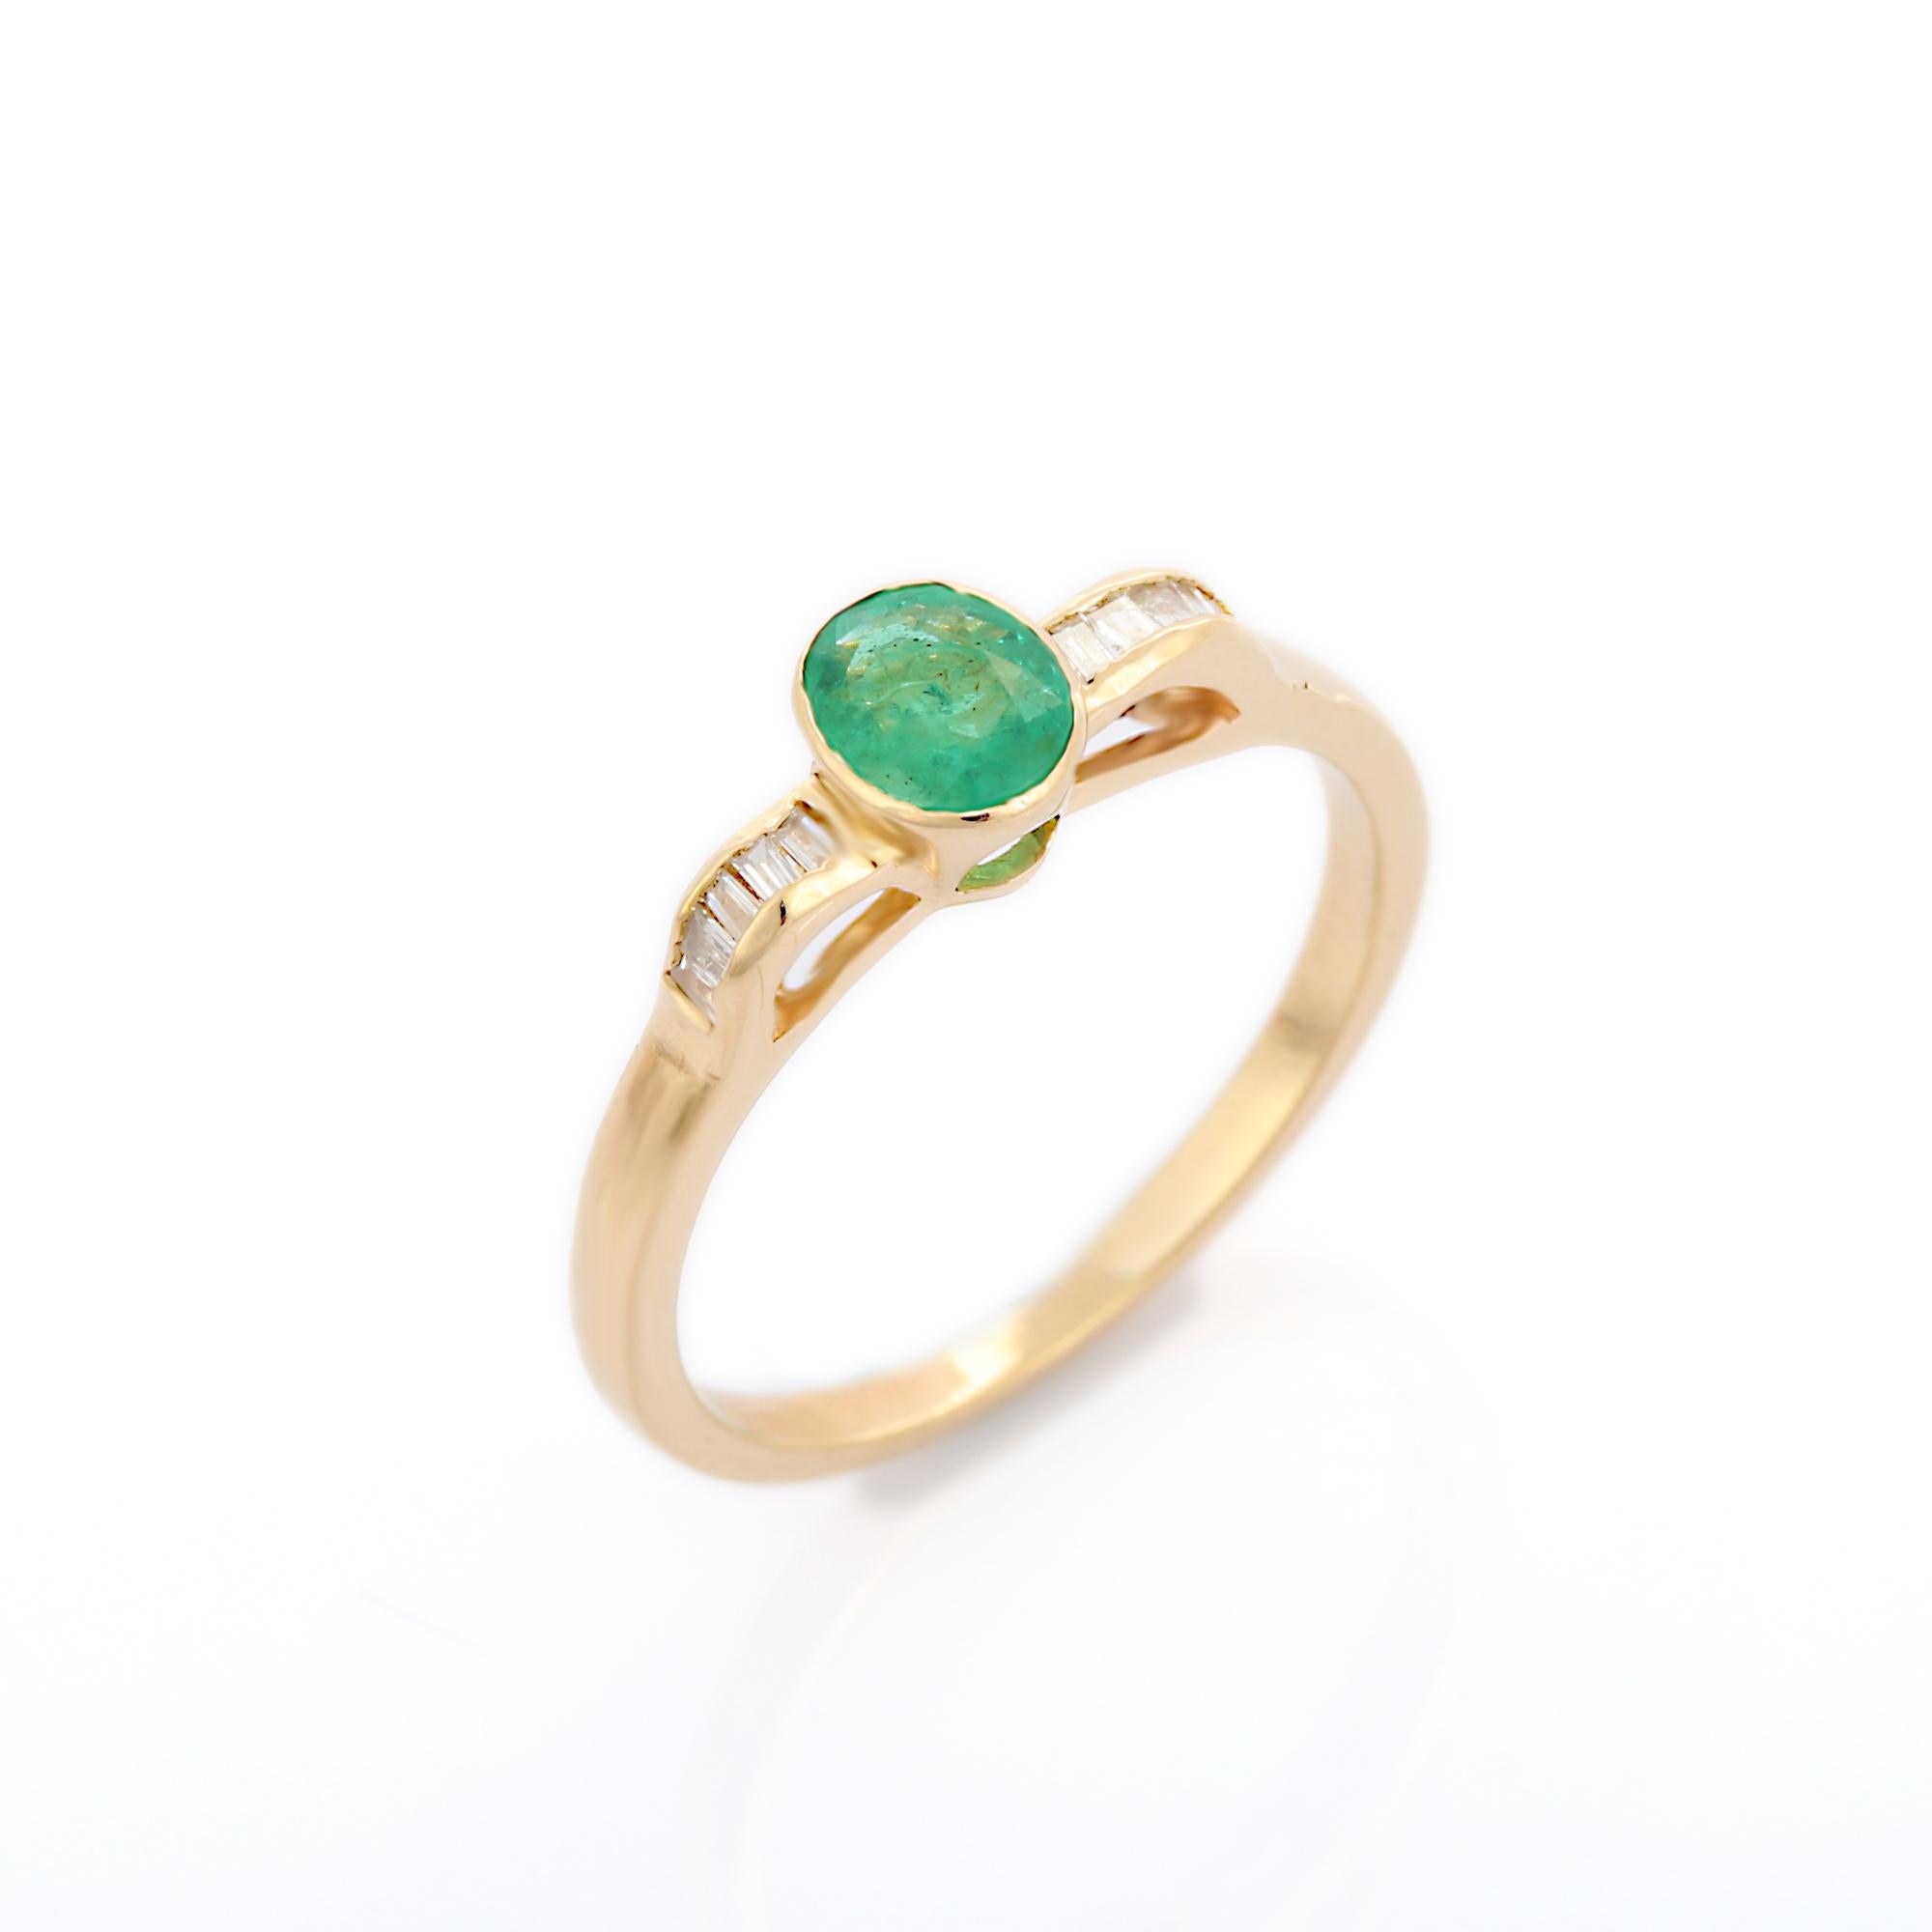 For Sale:  Minimalist 18k Solid Yellow Gold Emerald Diamond Ring 5